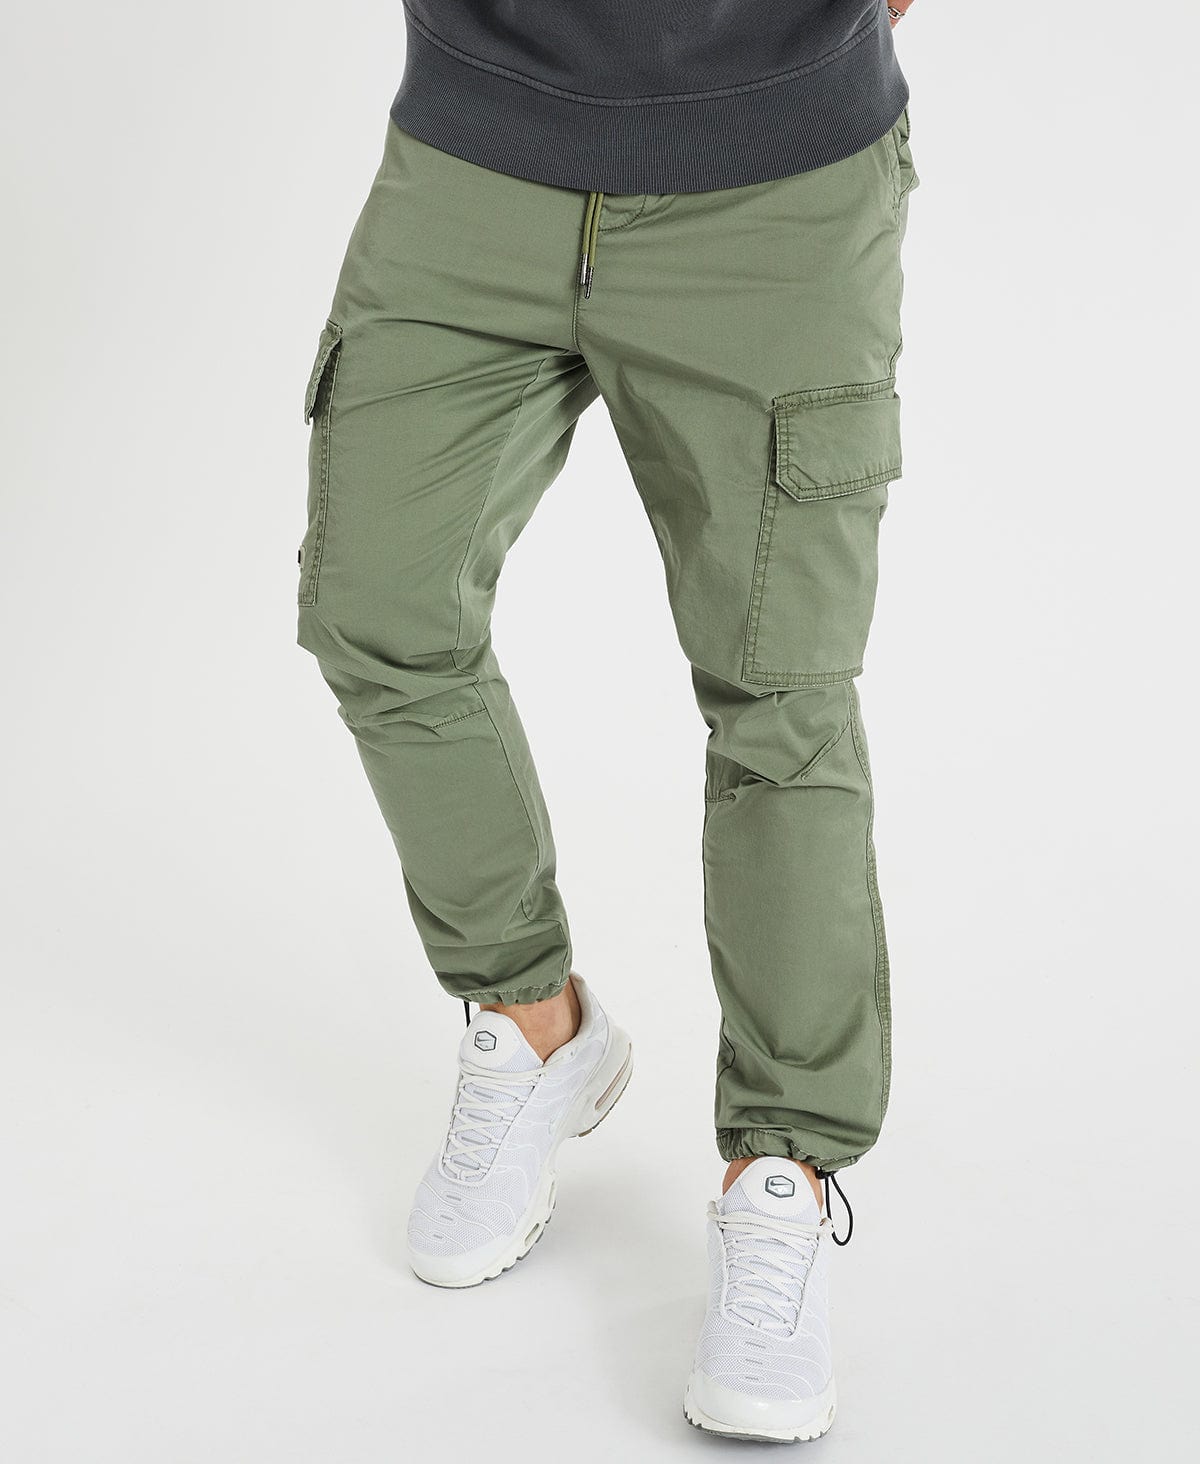 Green Khaki Pants : Target